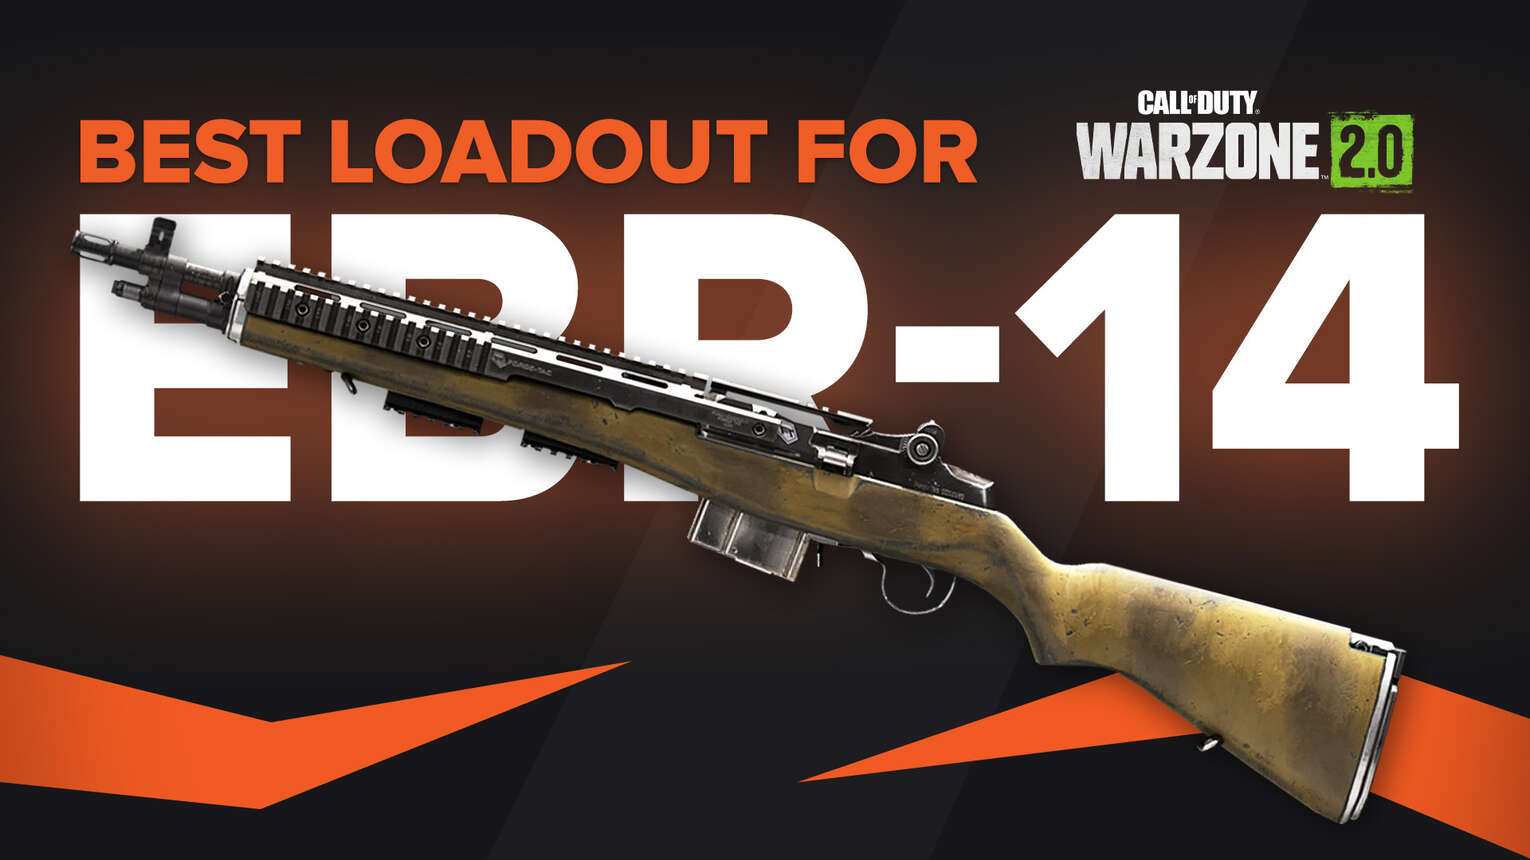 The 3 Best EBR-14 Loadouts in Call of Duty Warzone 2.0